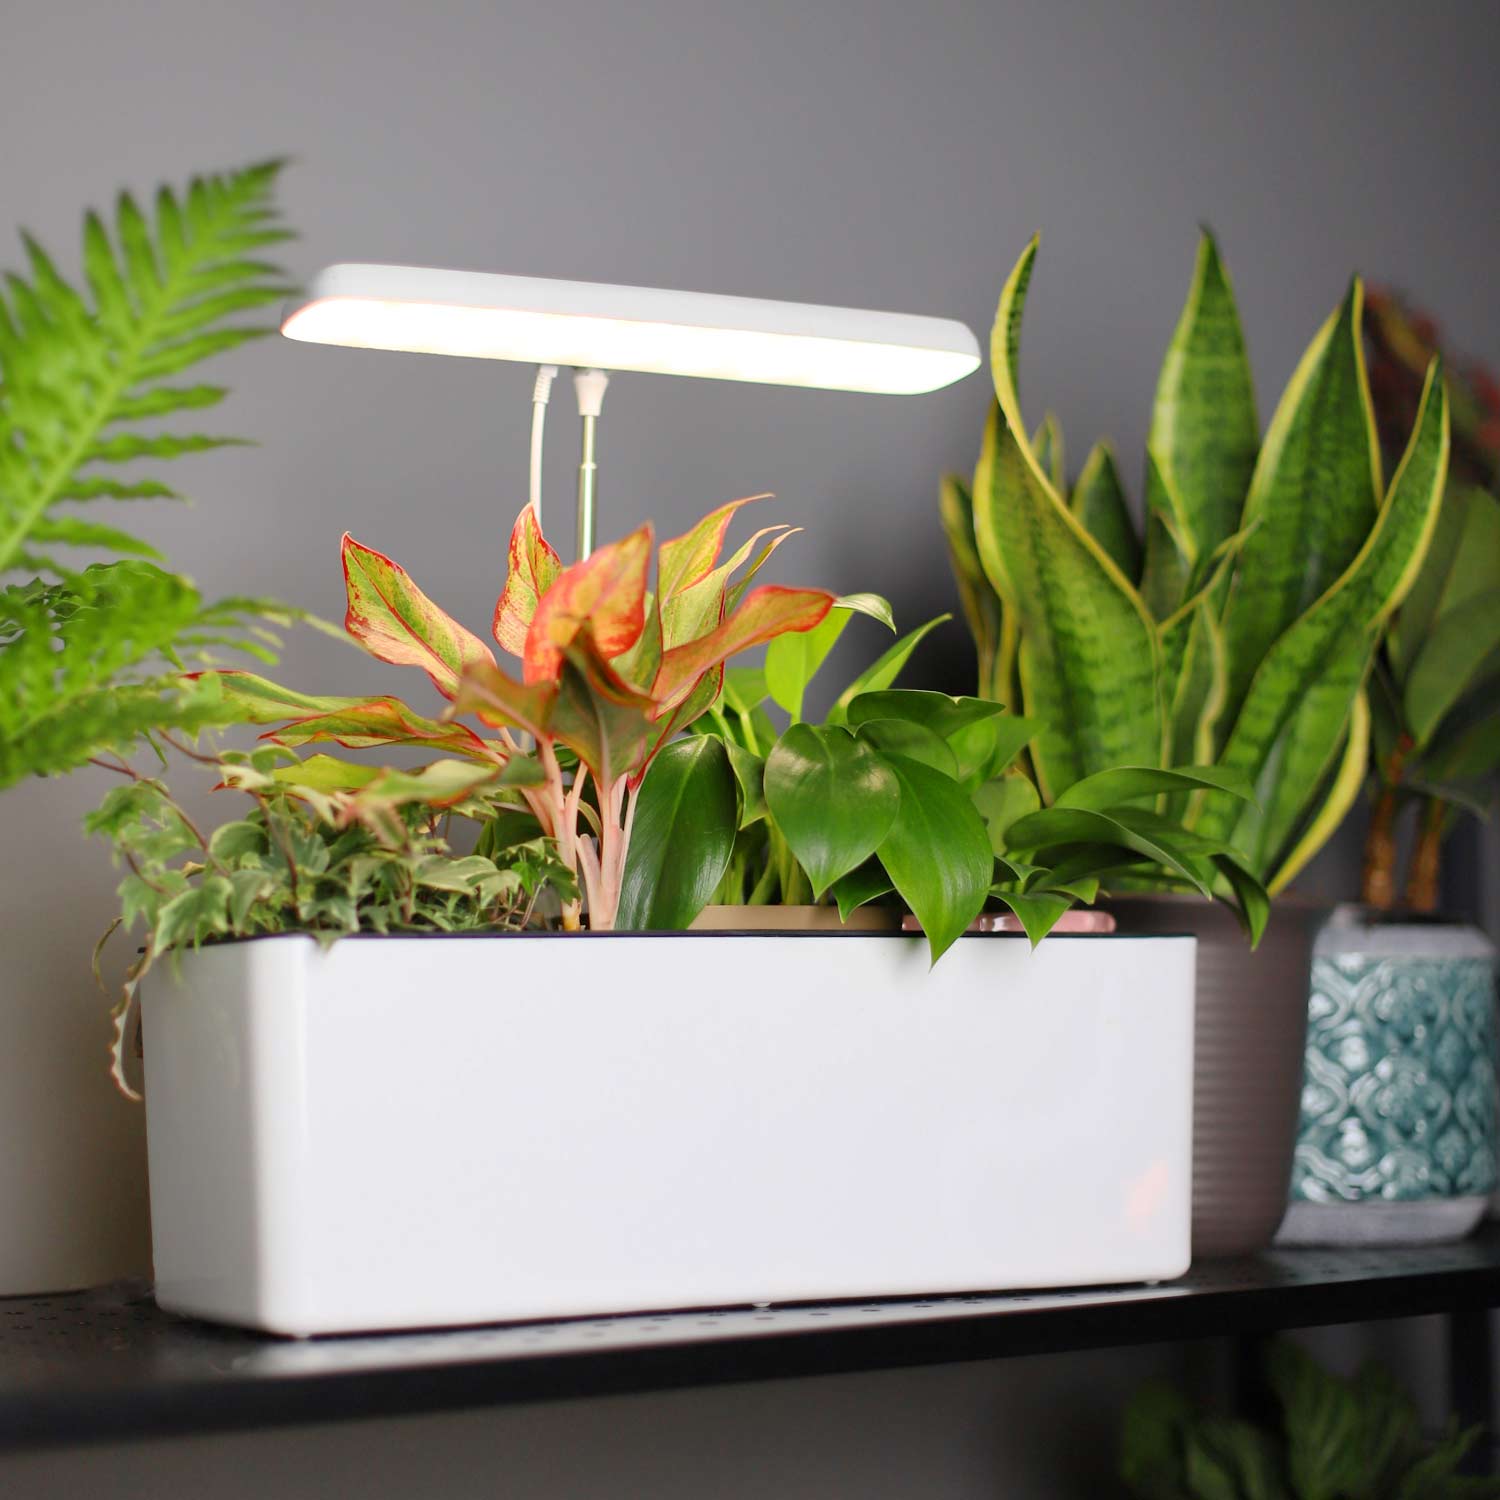 Super Lowest Price Smart Grow Light - TG304 decorative grow lamp light for house plants indirect light plants – J&C Lighting detail pictures